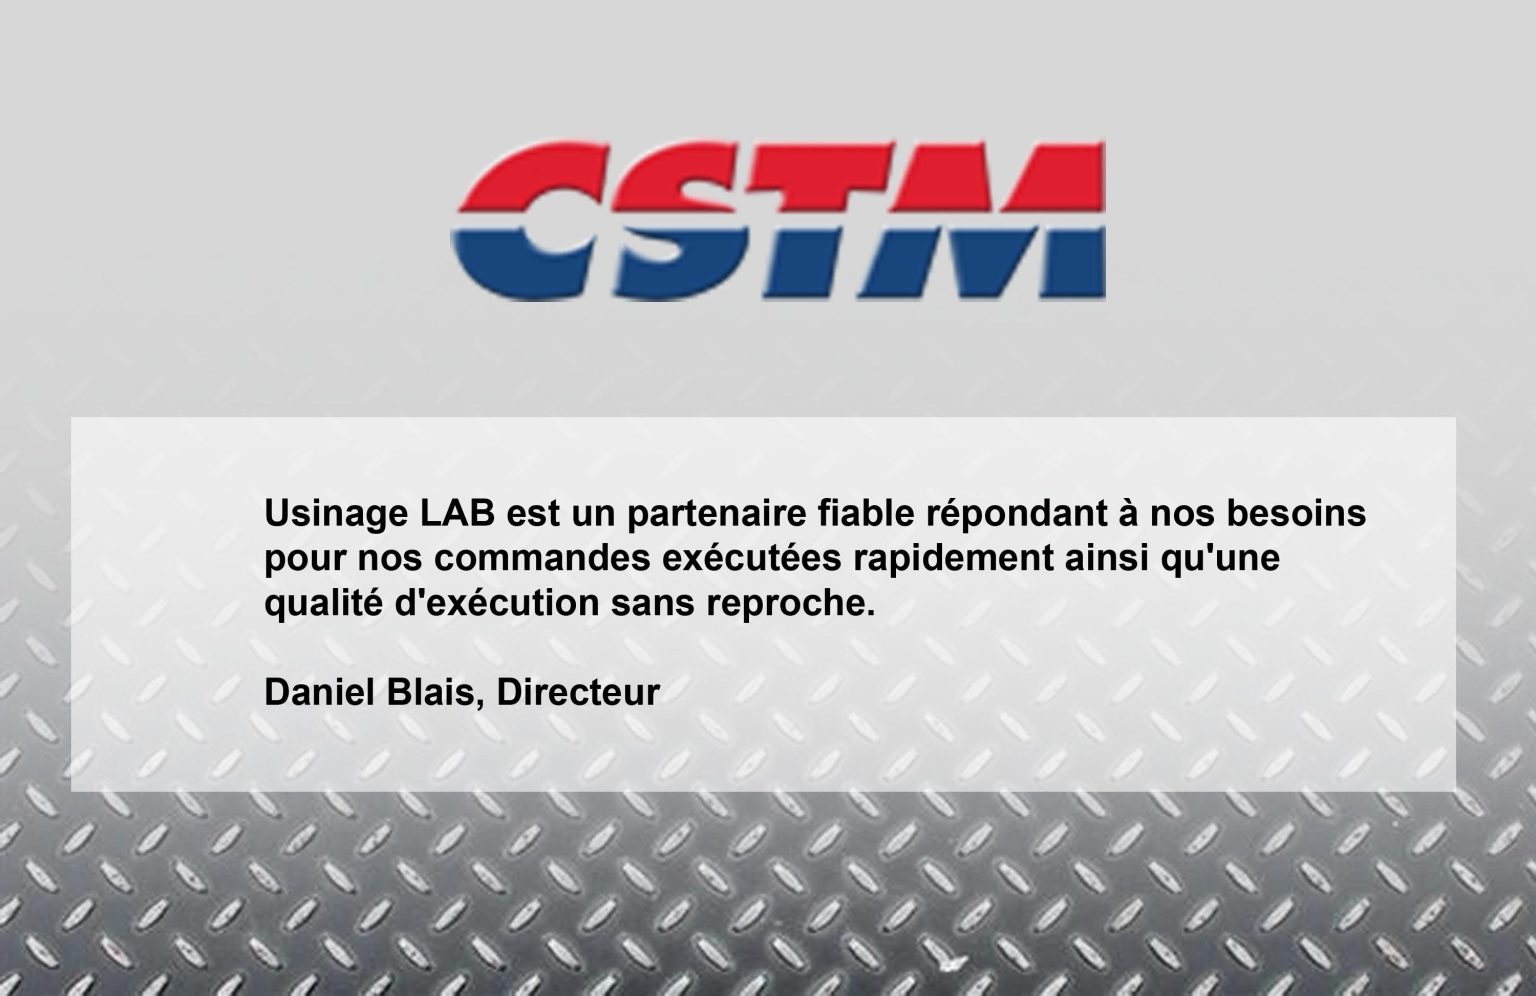 CSTM Testy